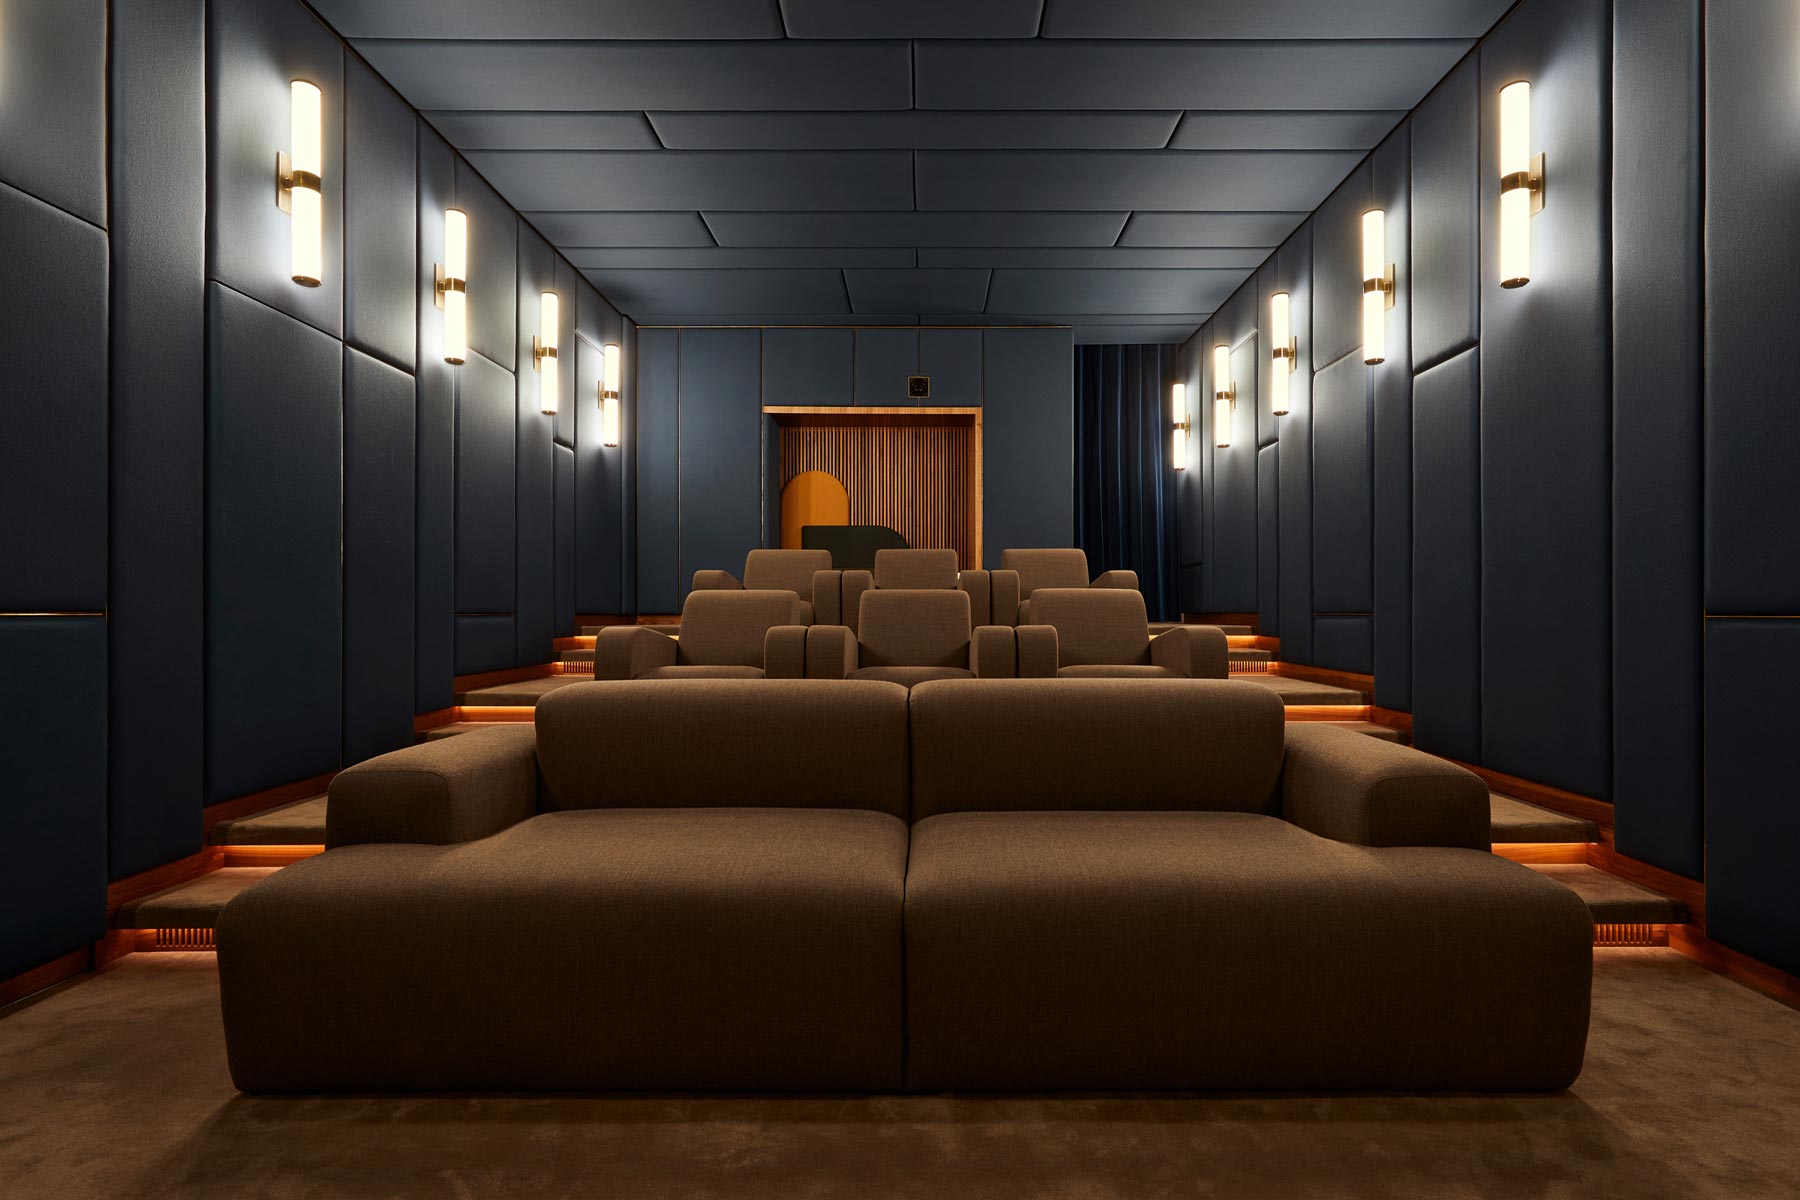 Private Luxury Cinema Interior Design by Ahocdrei Berlin